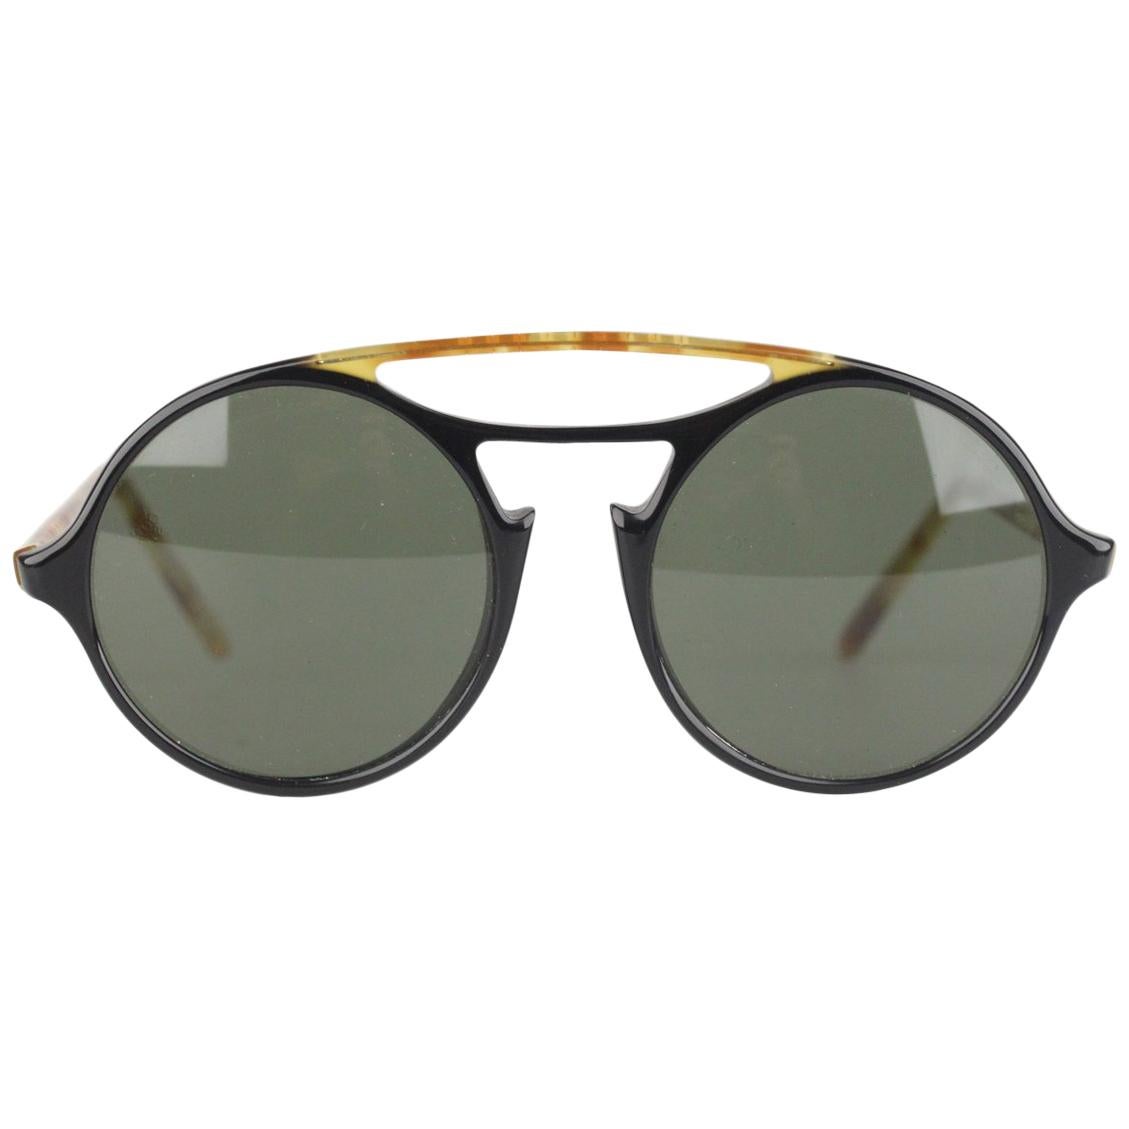 Persol Ratti Meflecto Vintage Tortoise Round Unisex Mod 650 Sunglasses 